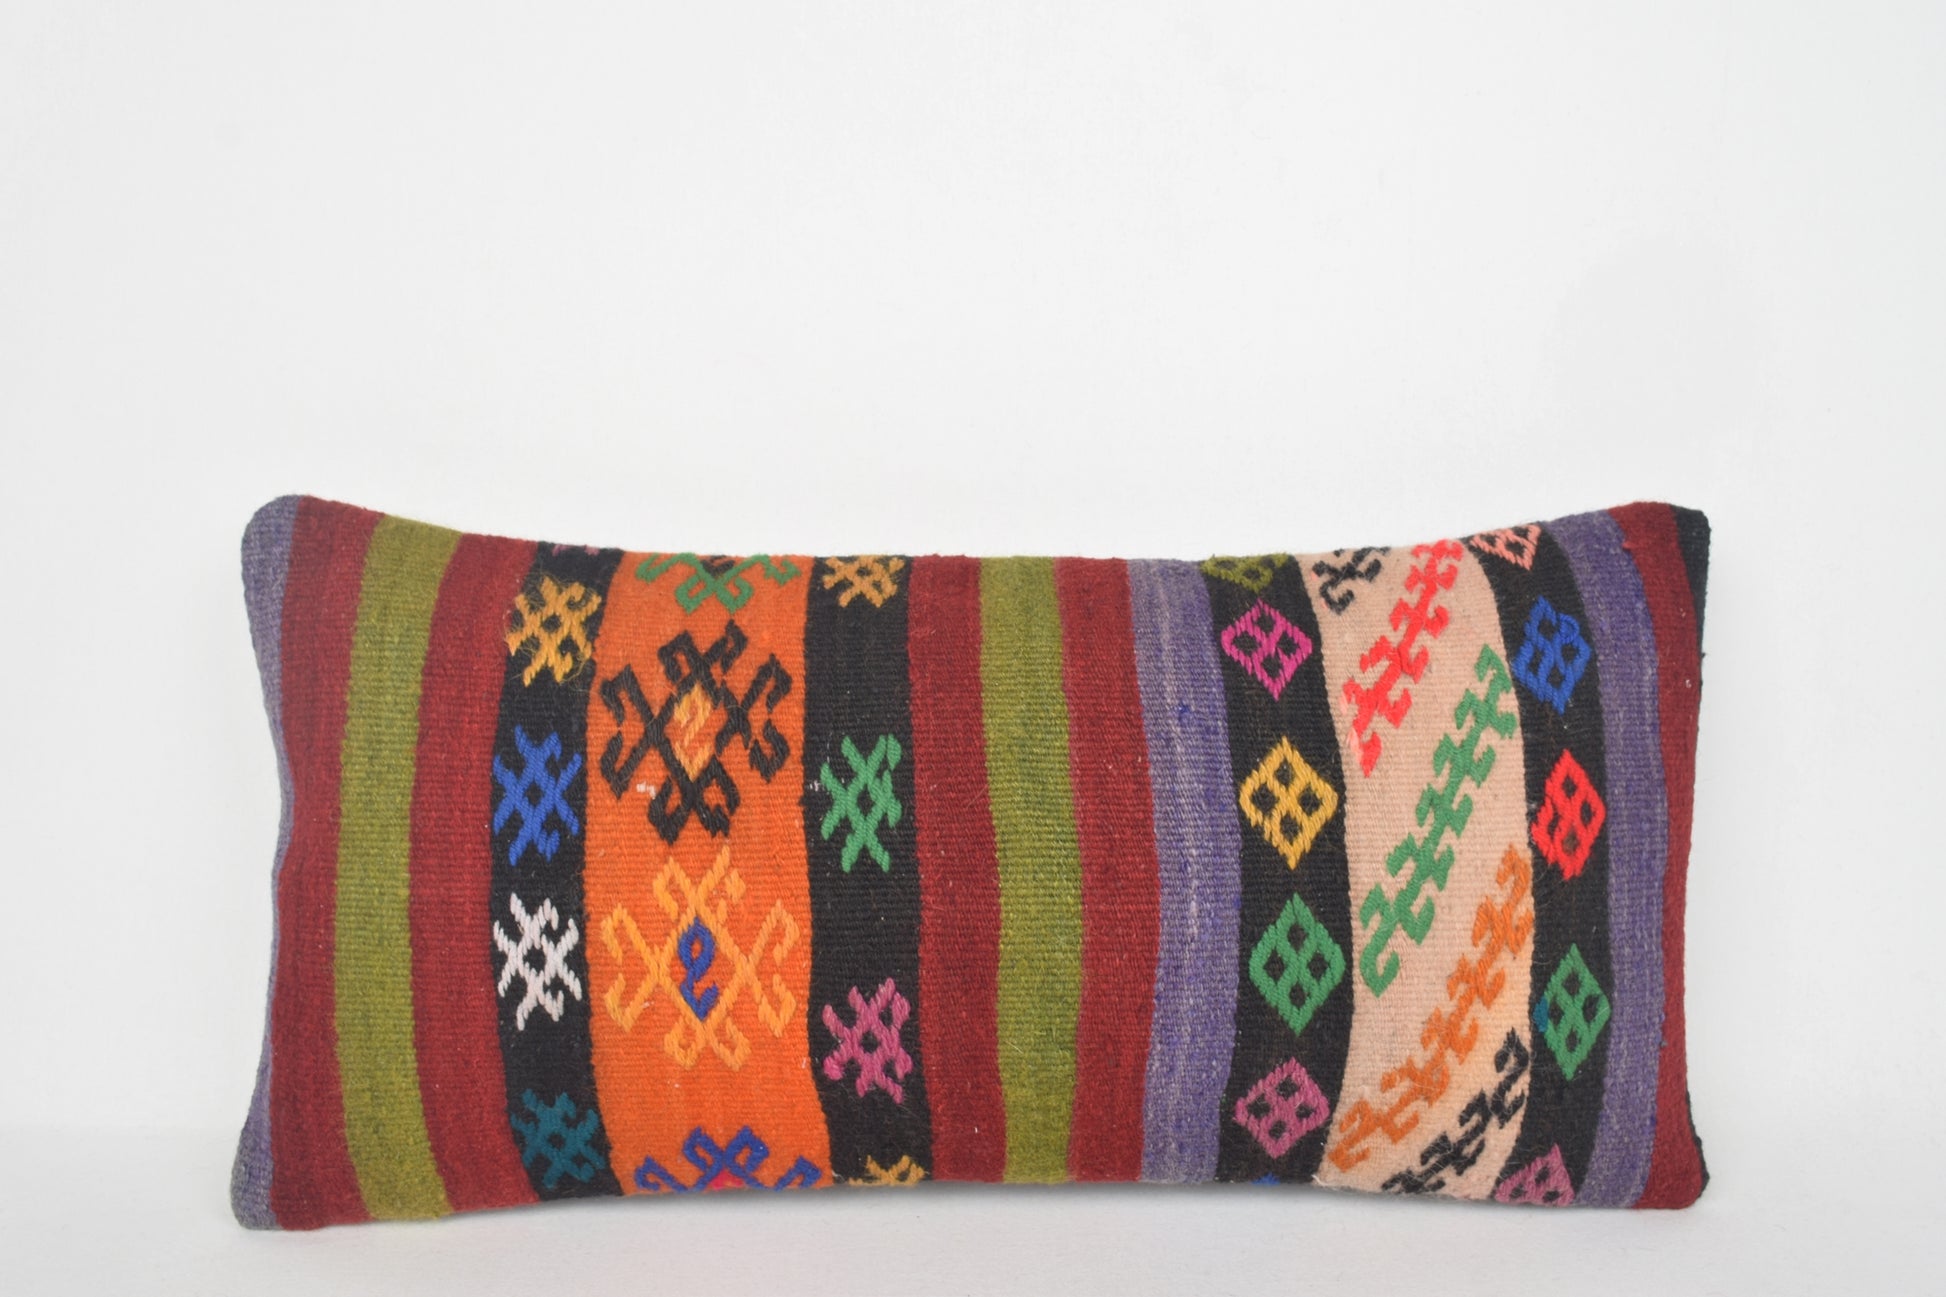 Vintage Style Decorative Pillows, Lumbar Bohemian Standard Pillow Shams F00162 12x24 " - 30x60 cm.